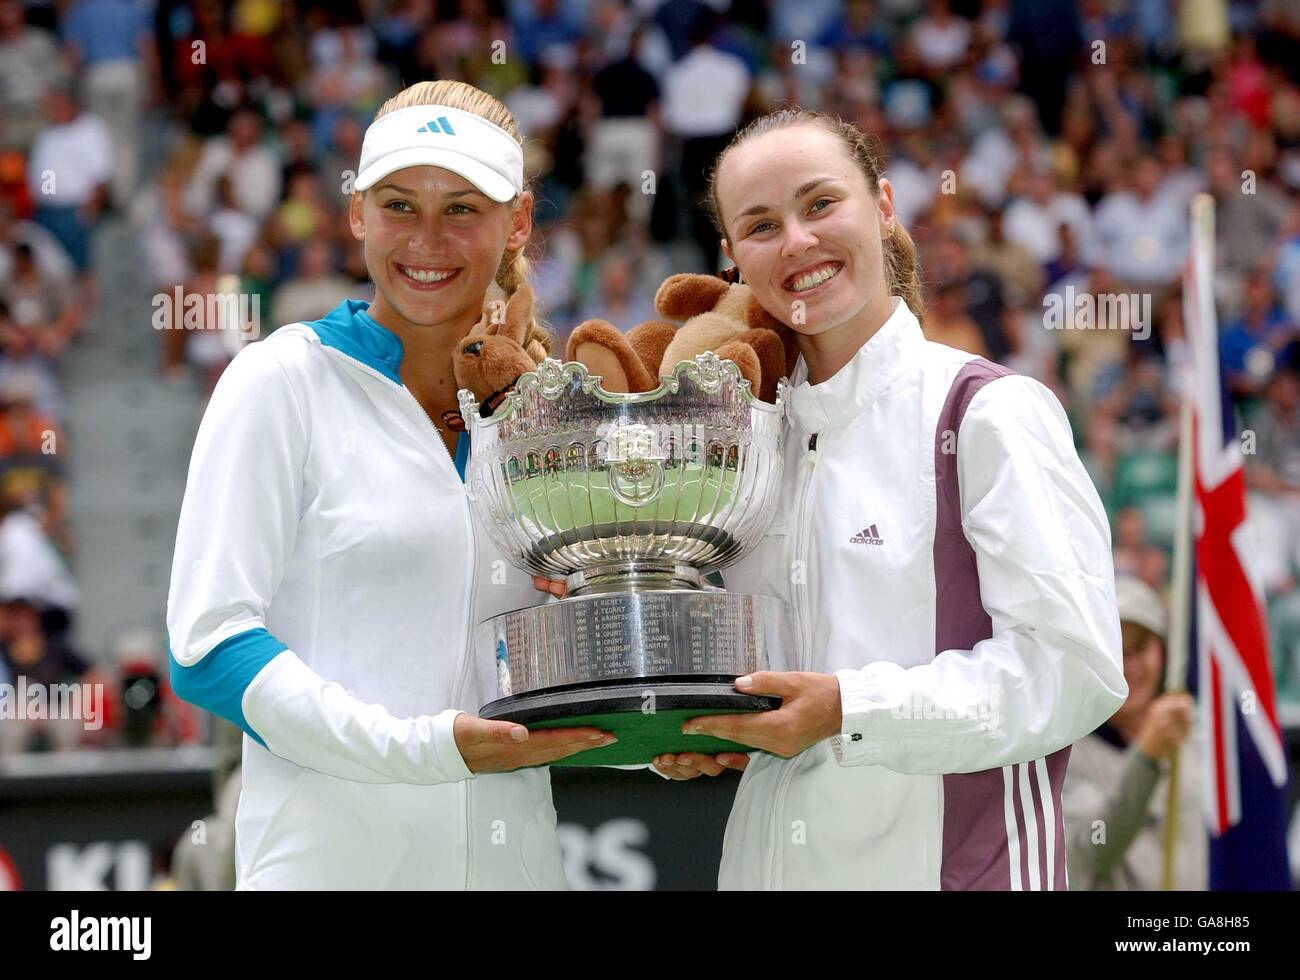 Tennis Australian Open Womens Doubles Finals. Anna Kournikova and